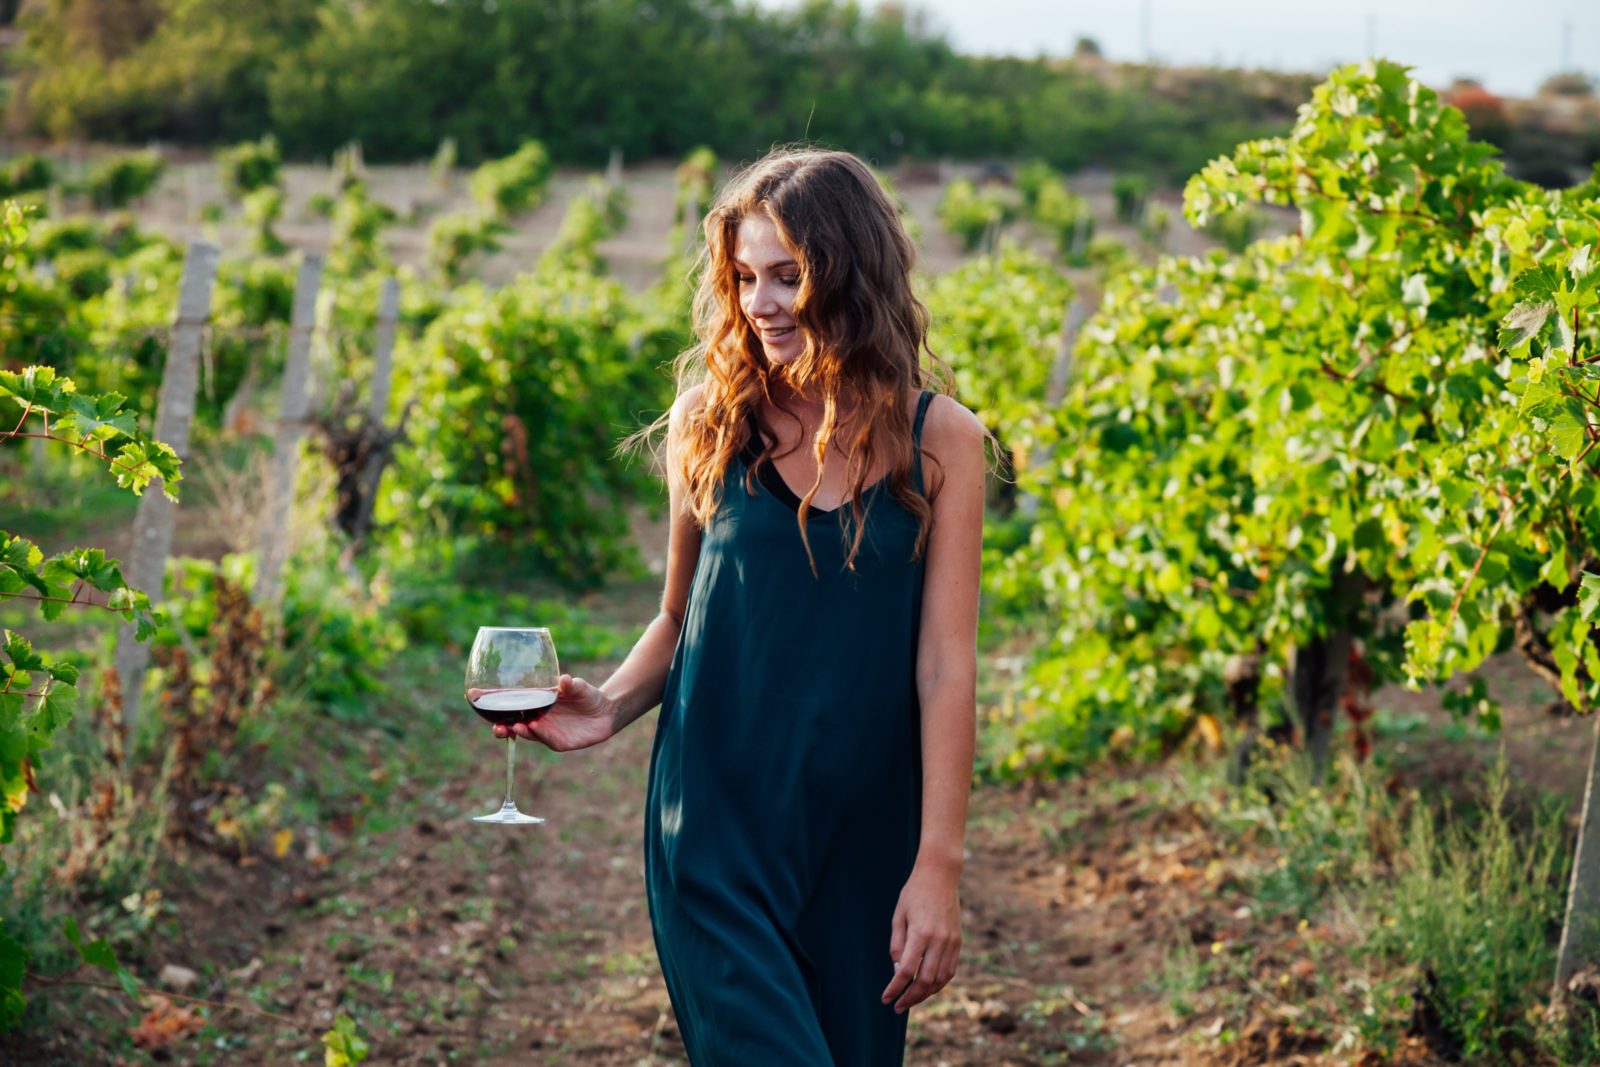 Enjoying a glass of wine strolling in the vineyard